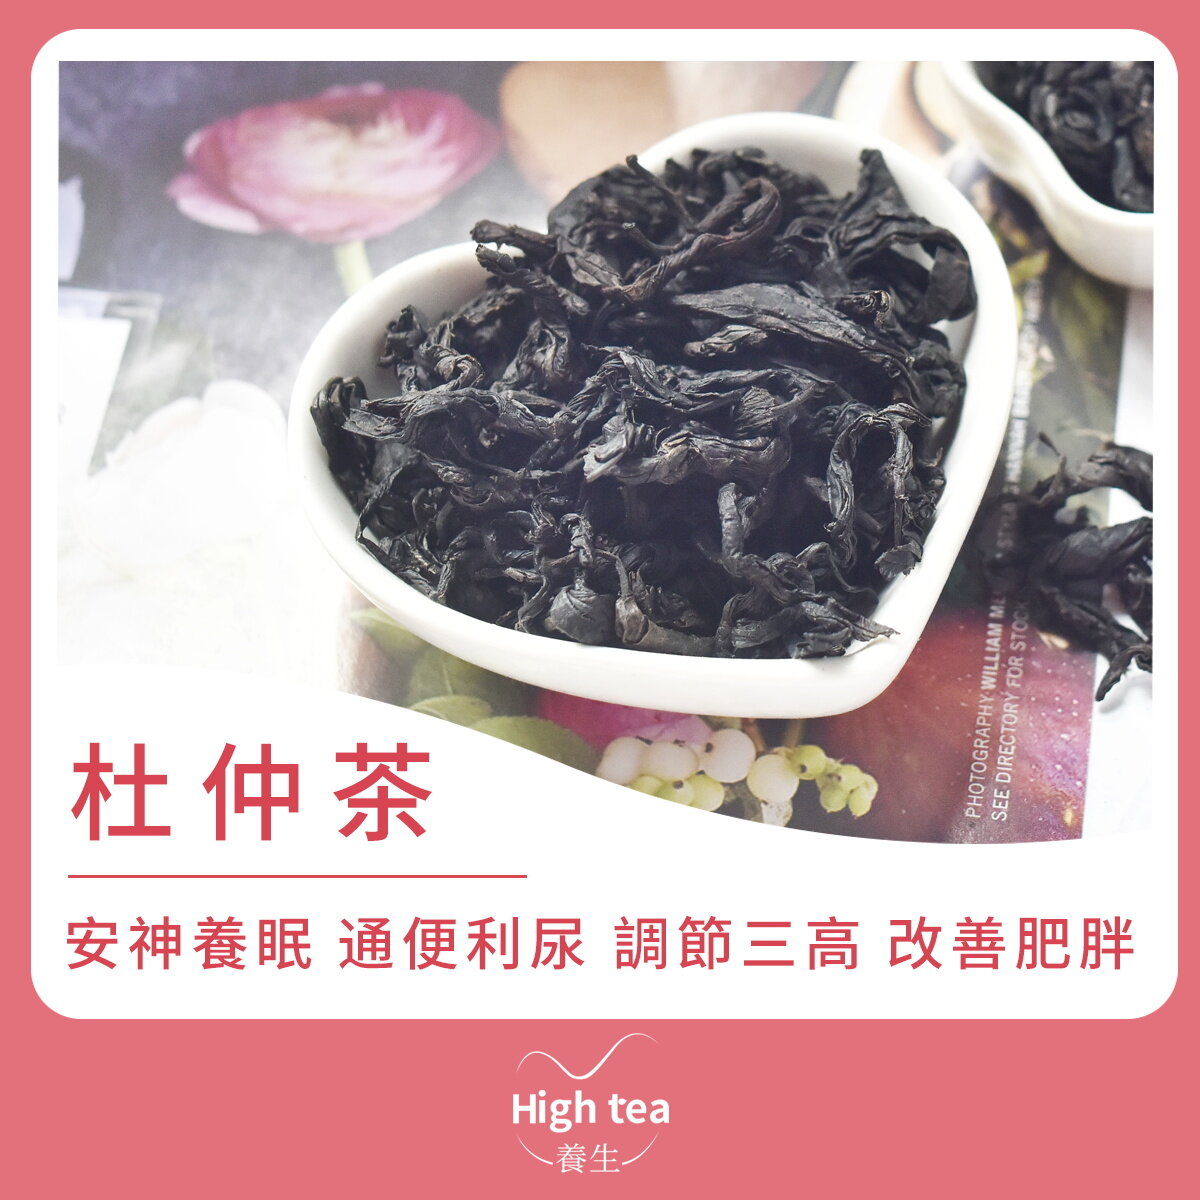 High tea養生| 杜仲茶（60g）護肝補腎安神養眠調節三高改善肥胖| HKTVmall 香港最大網購平台